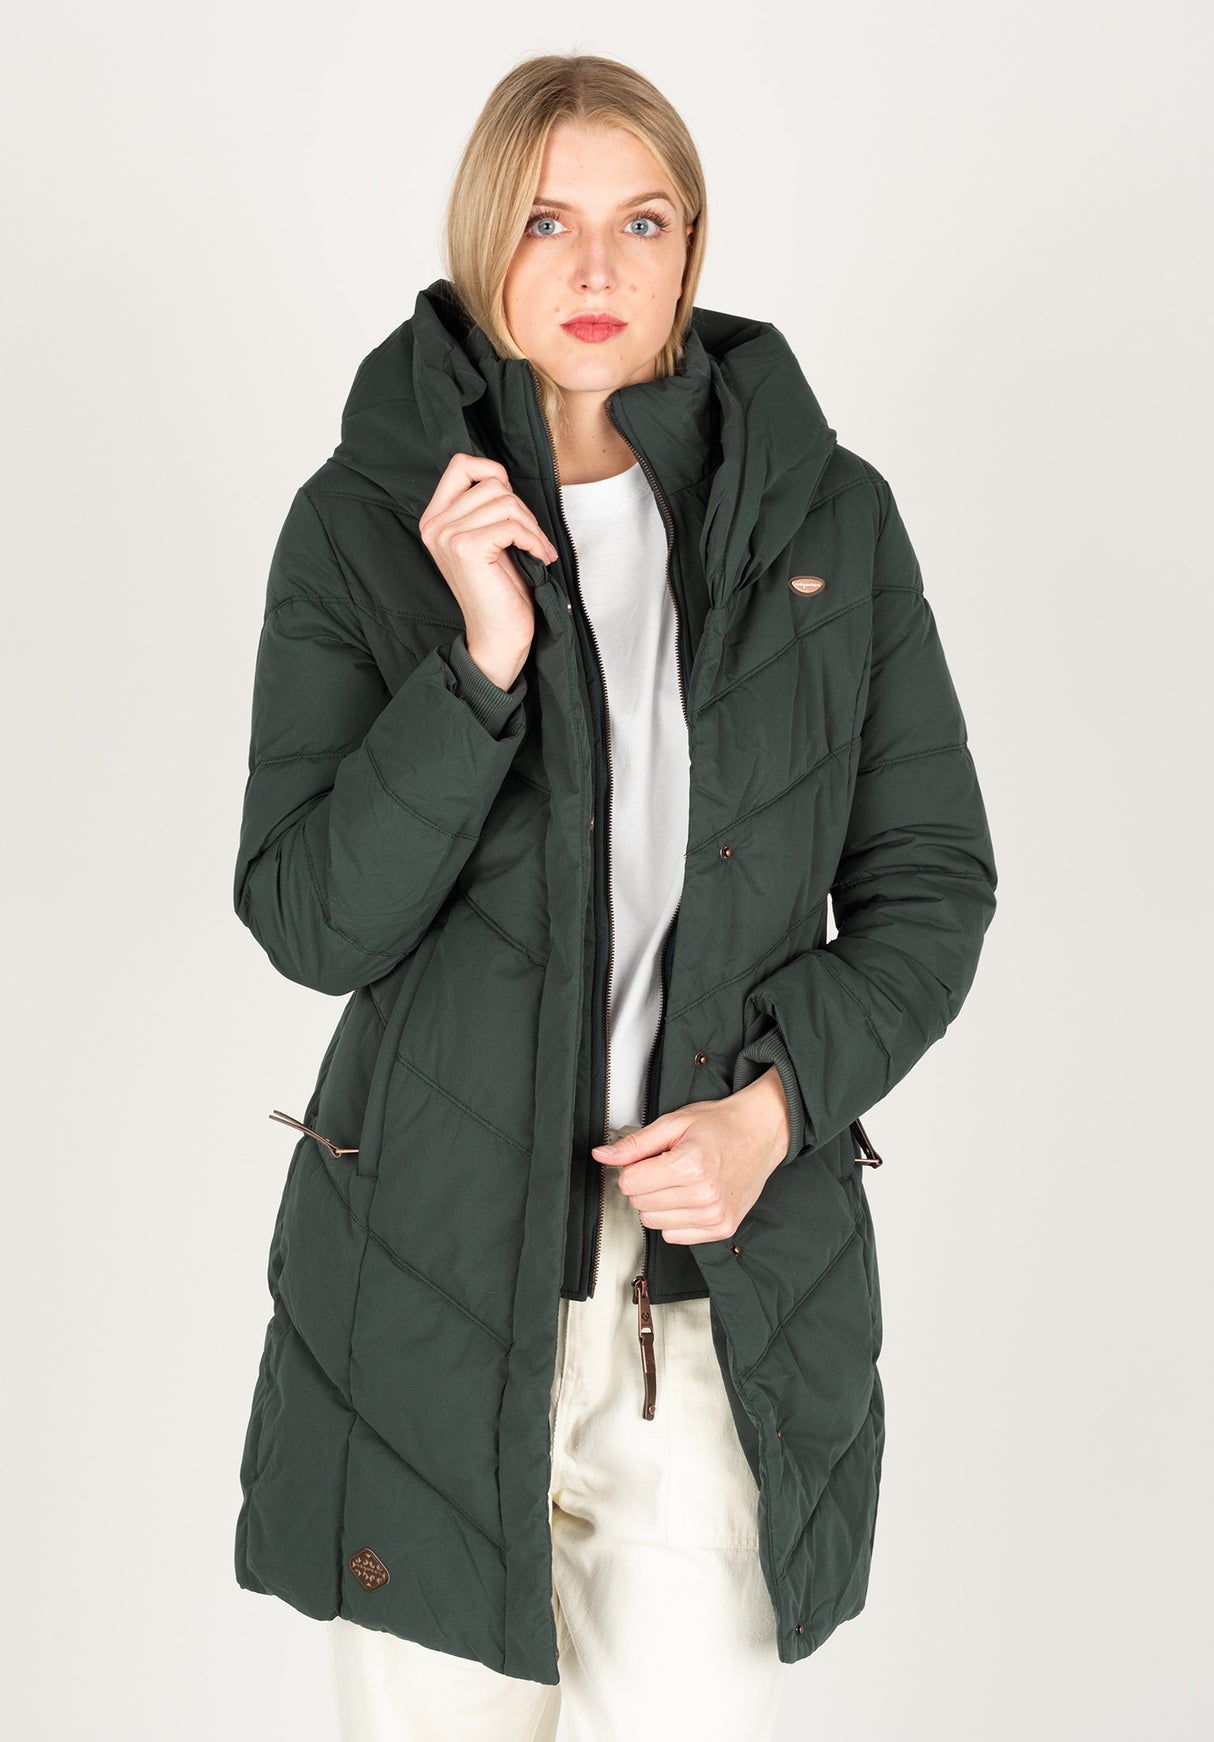 Ragwear Winter for Women darkgreen Jackets – Natalka in TITUS 323